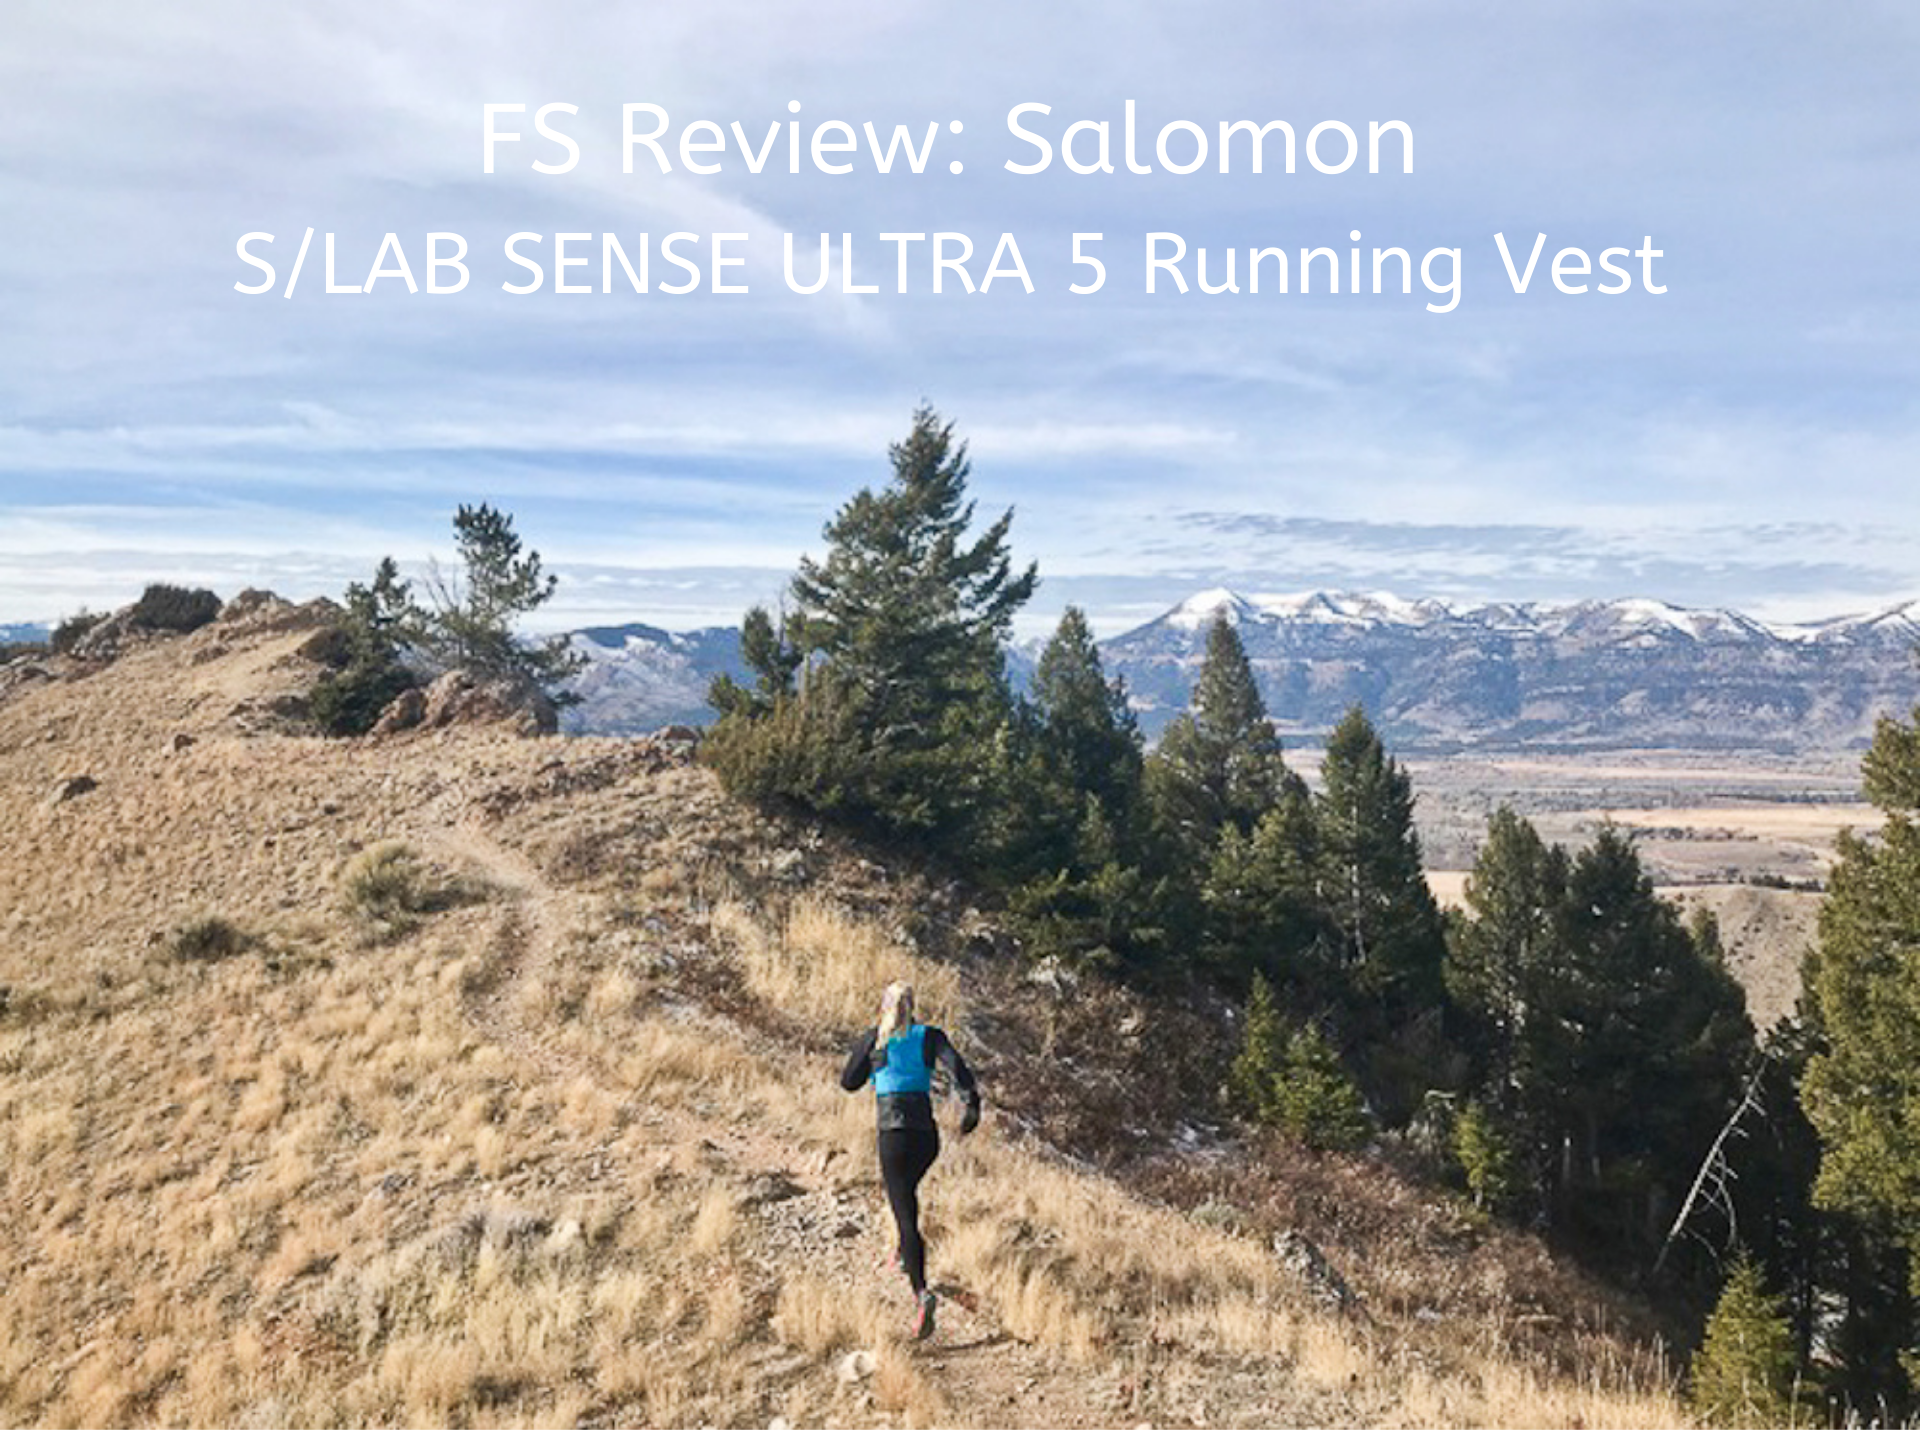 https://fasterskier.com/wp-content/blogs.dir/1/files/2019/11/FS-Review_-Salomon-S_LAB-SENSE-ULTRA-5-Running-Vest.png